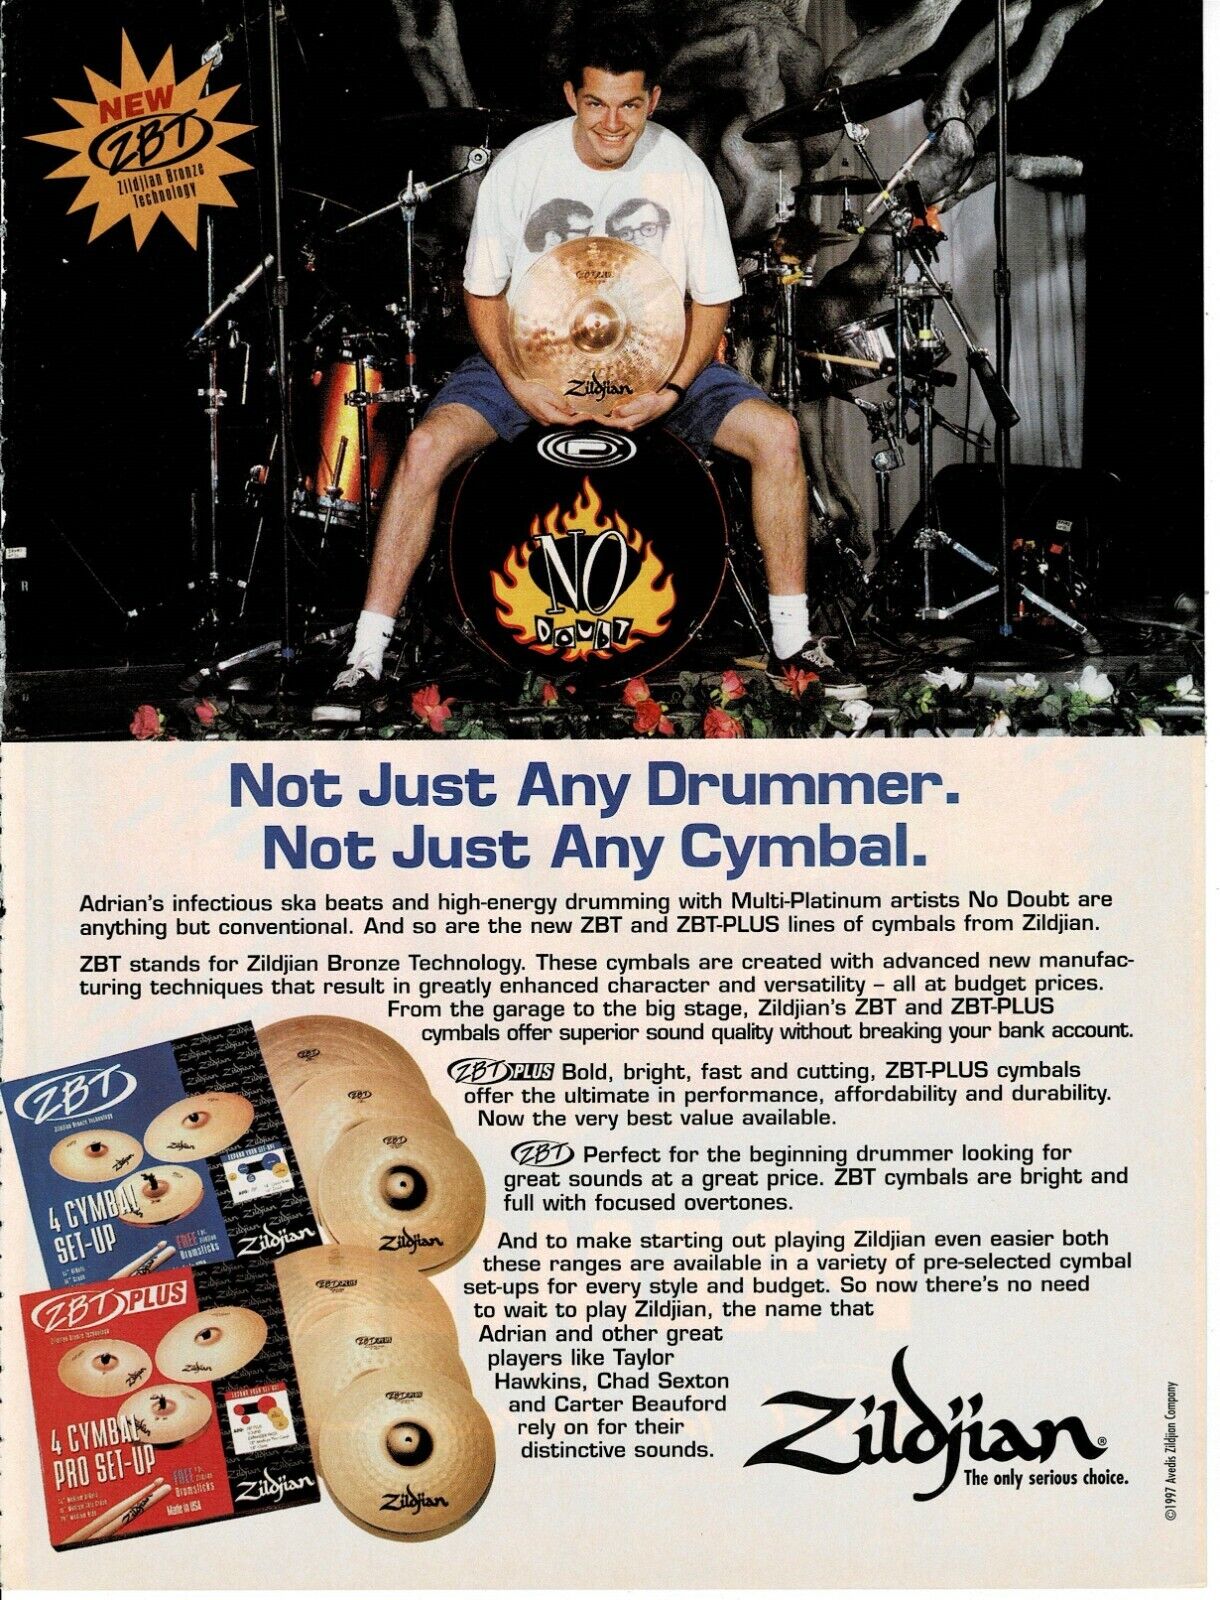 ZILDJIAN Cymbals - Adrian Young of NO DOUBT - 1997 Print Advertisement